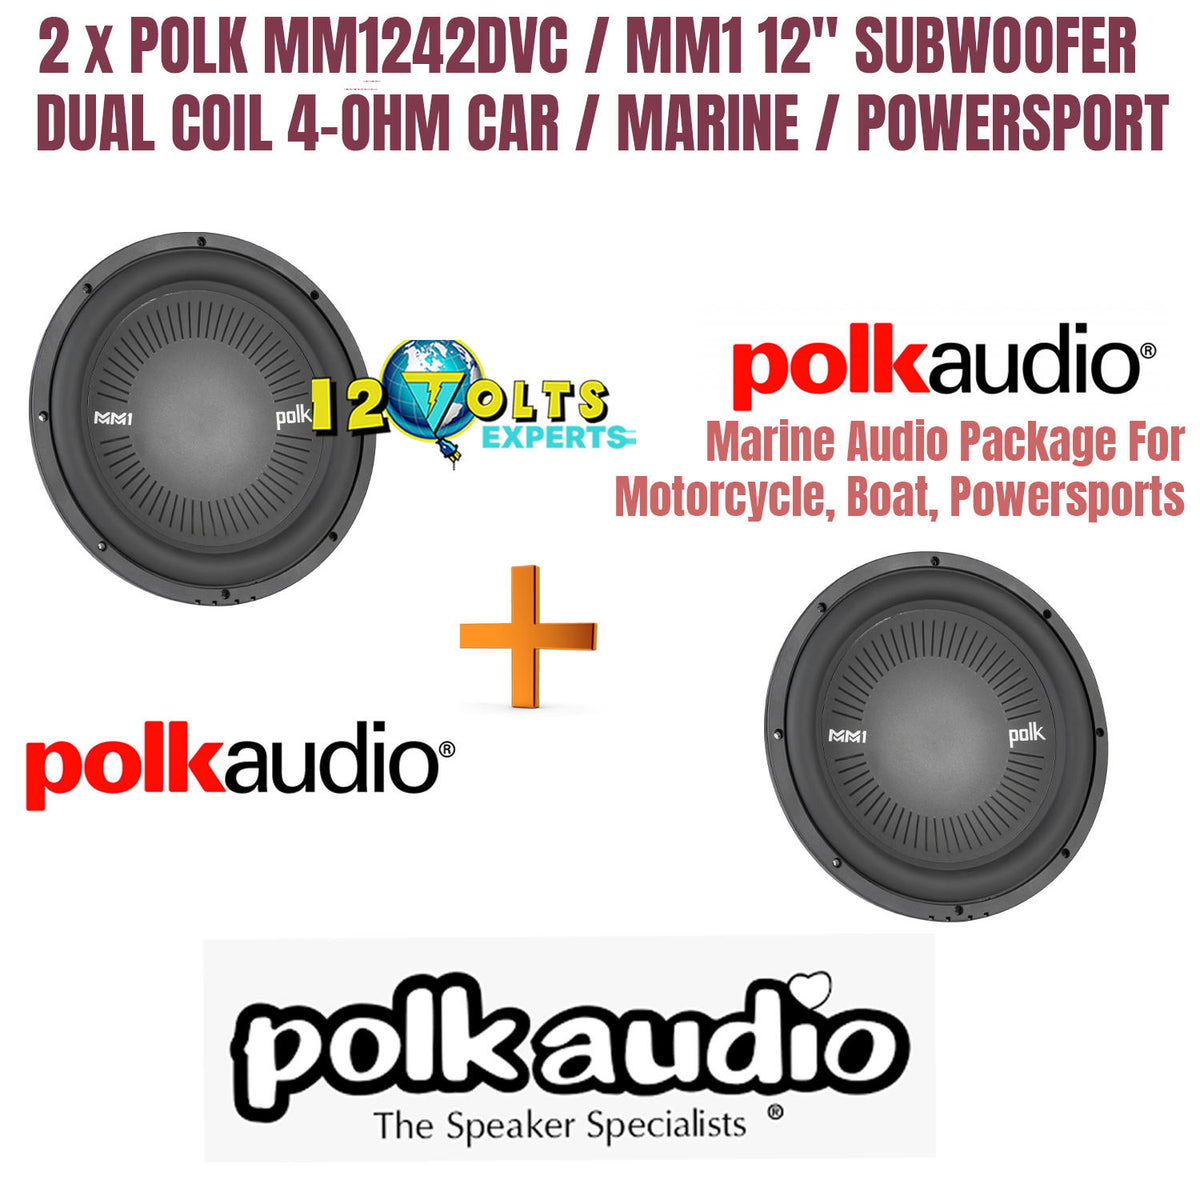 2 X POLK AUDIO MM1242DVC MM1 12" CAR / MARINE SUBWOOFER 1200 WATT DVC 4-OHM SUB